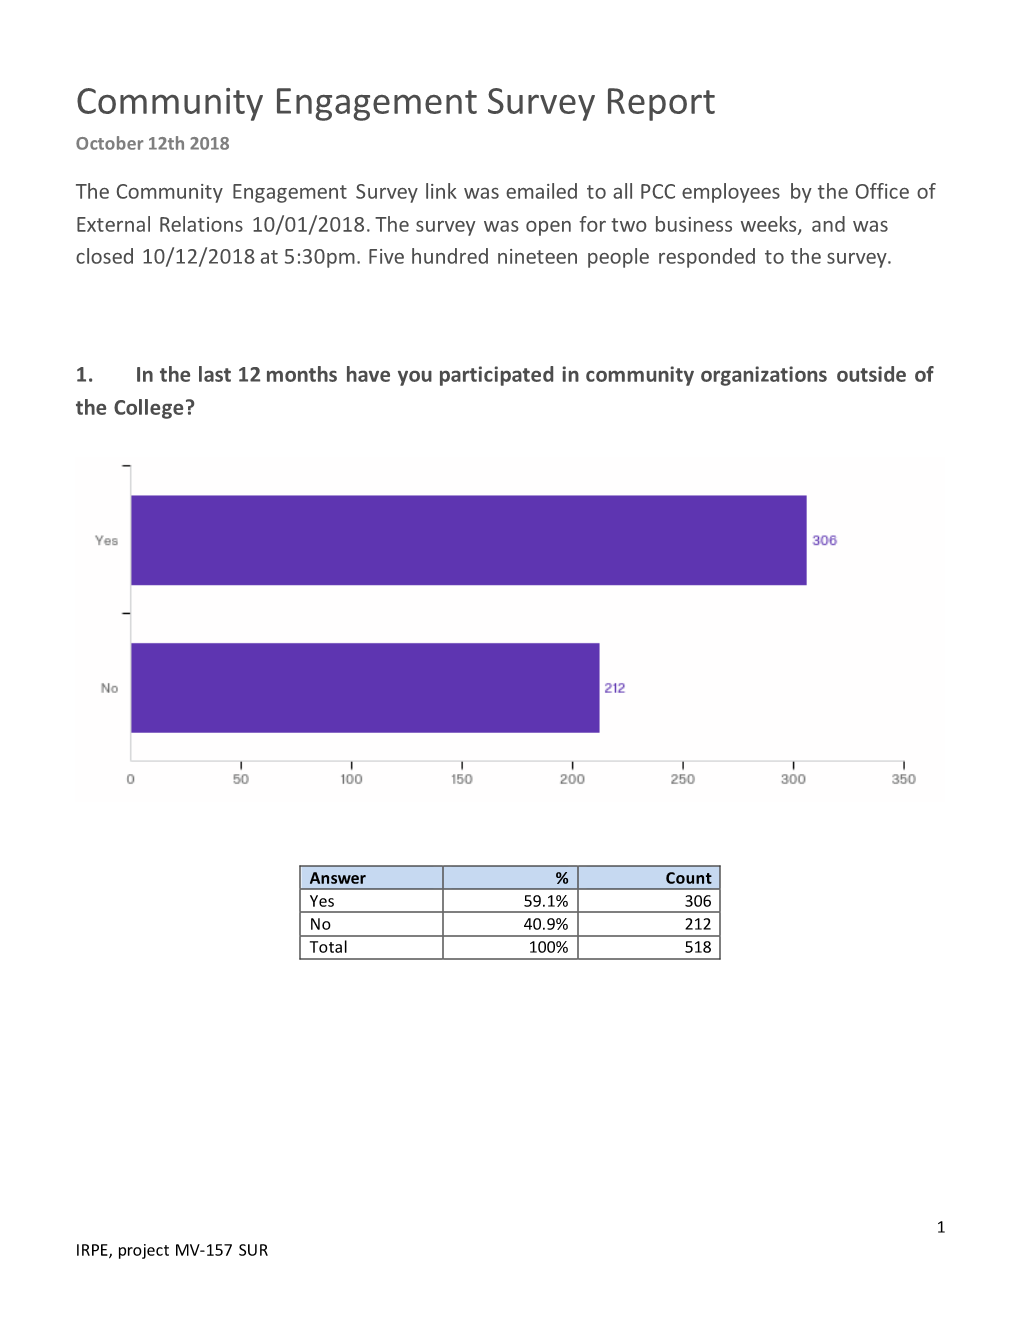 Community Engagement Survey Report Oct 2018